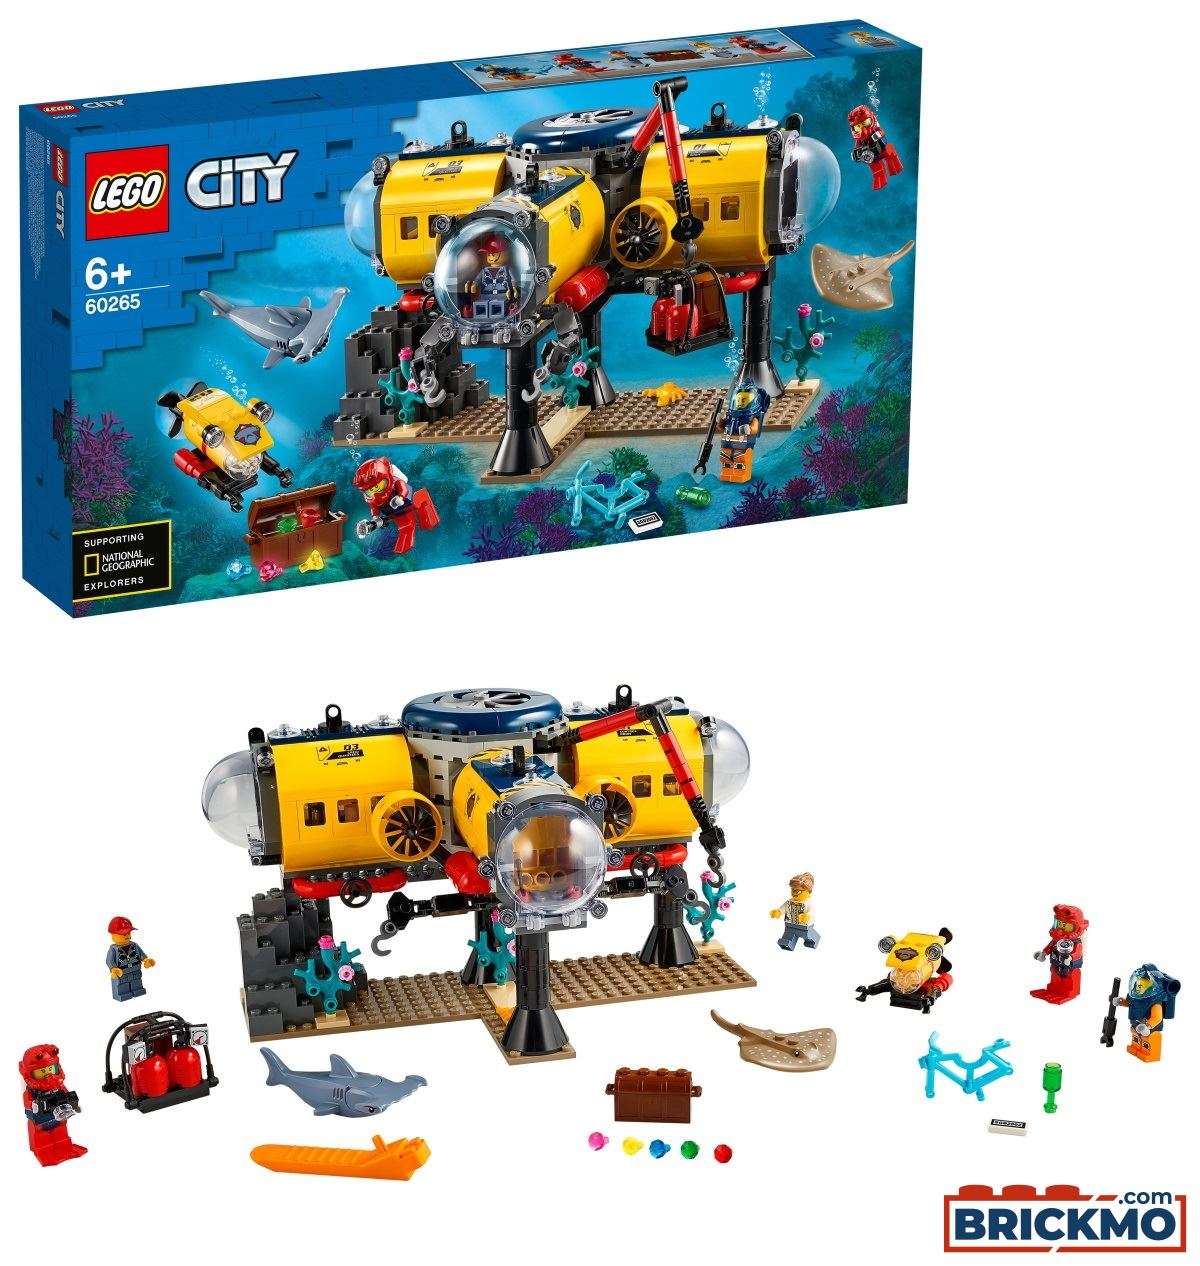 LEGO City 60265 Meeresforschungsbasis 60265